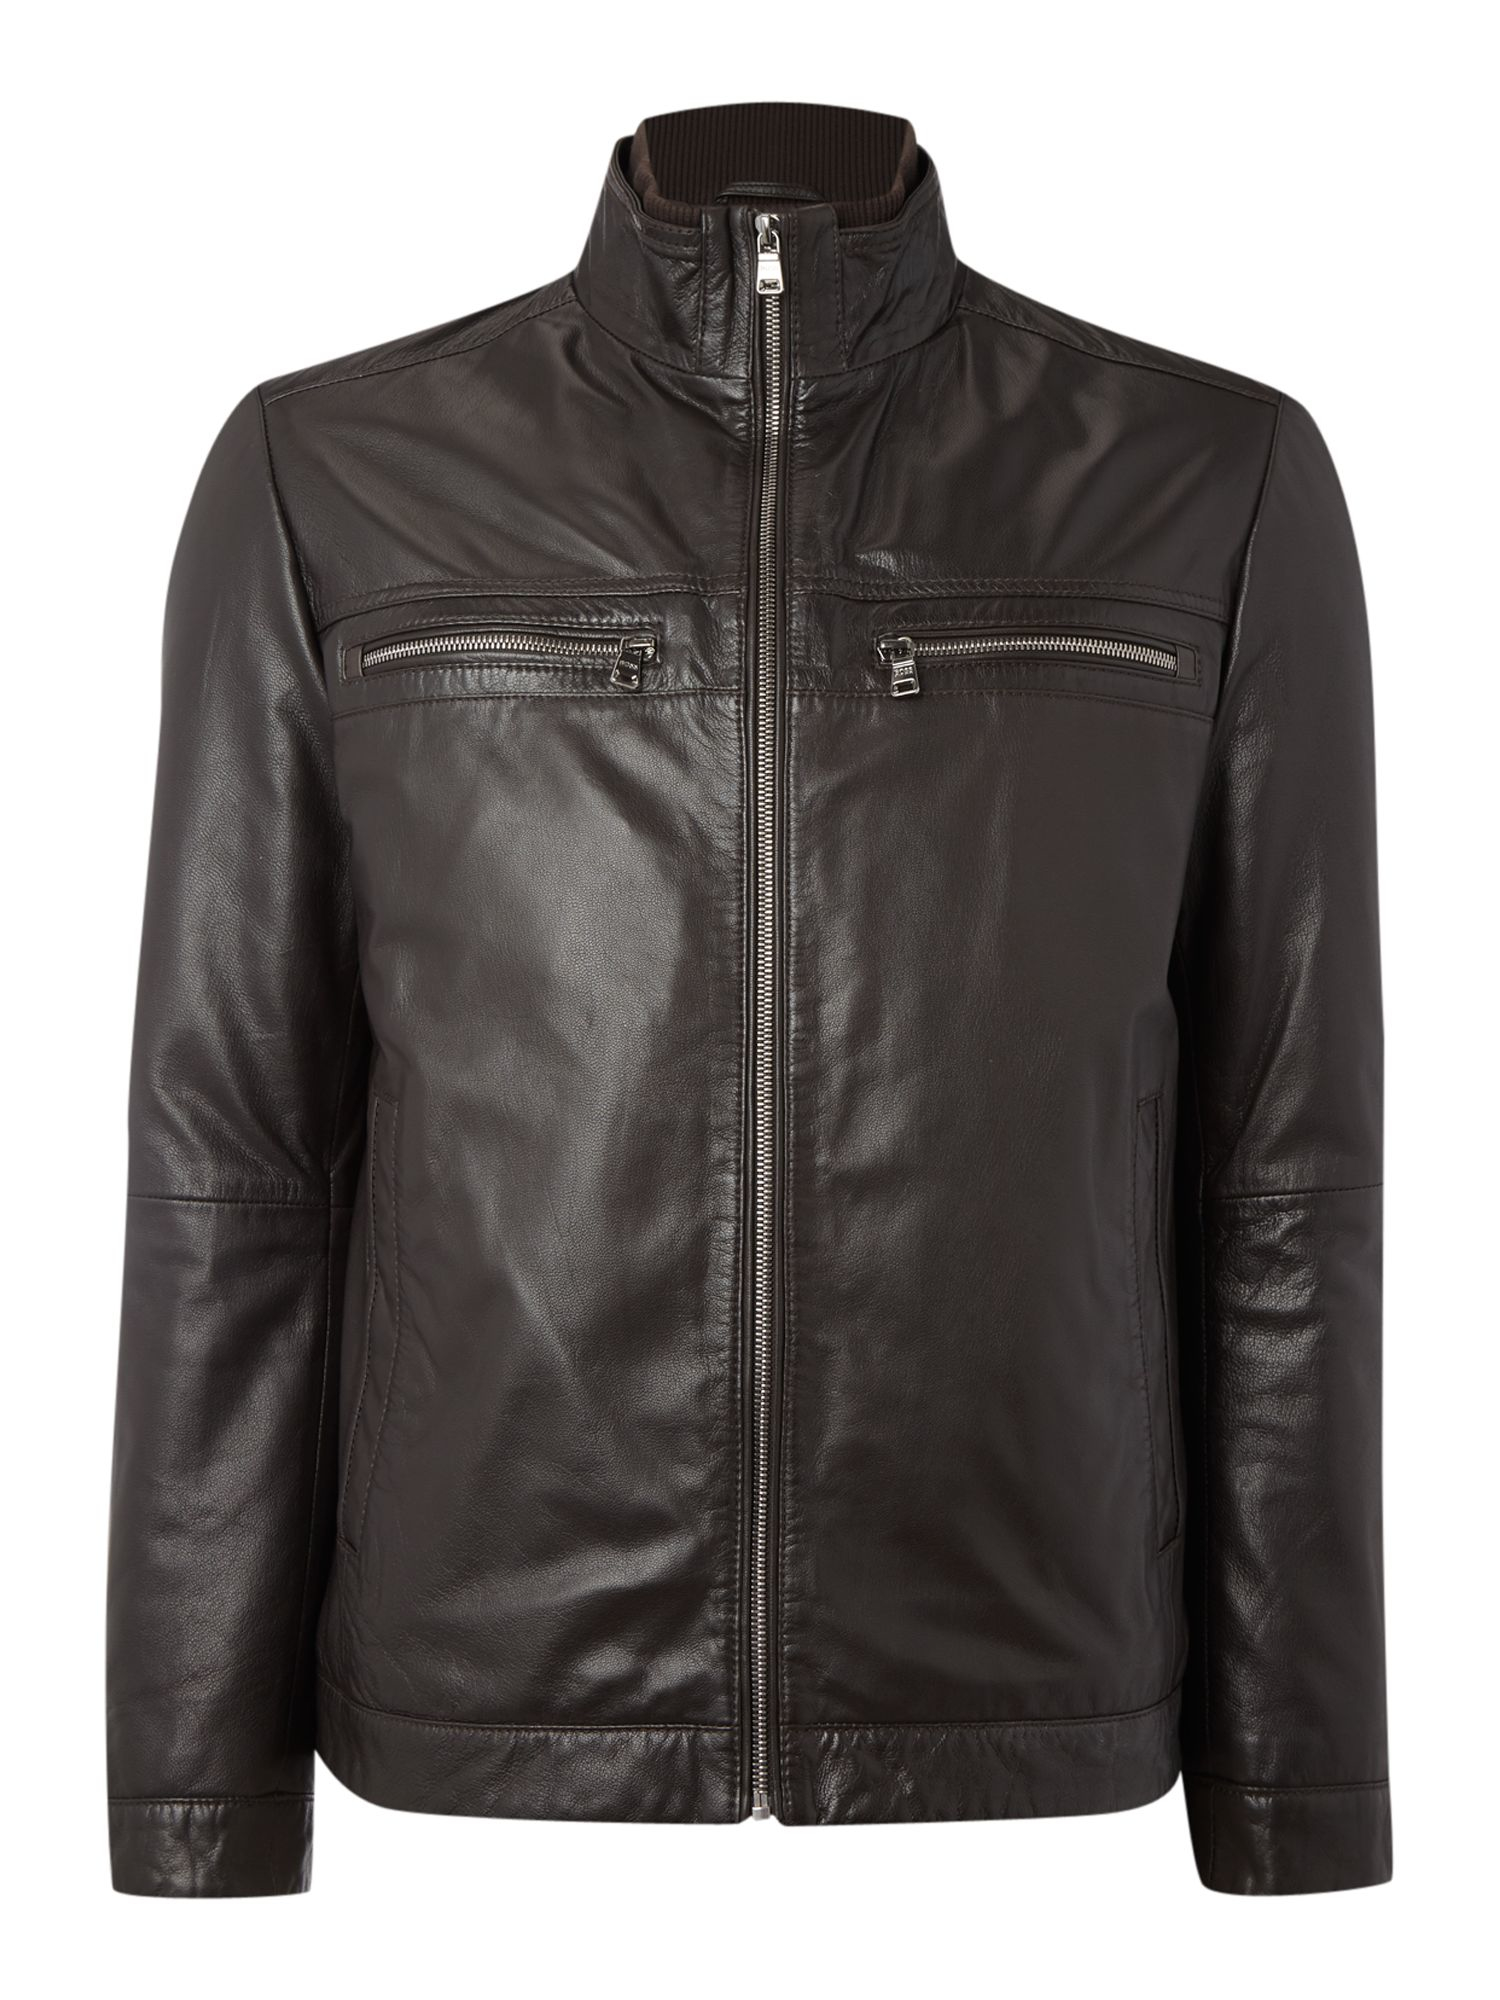 Zip up leather jacket